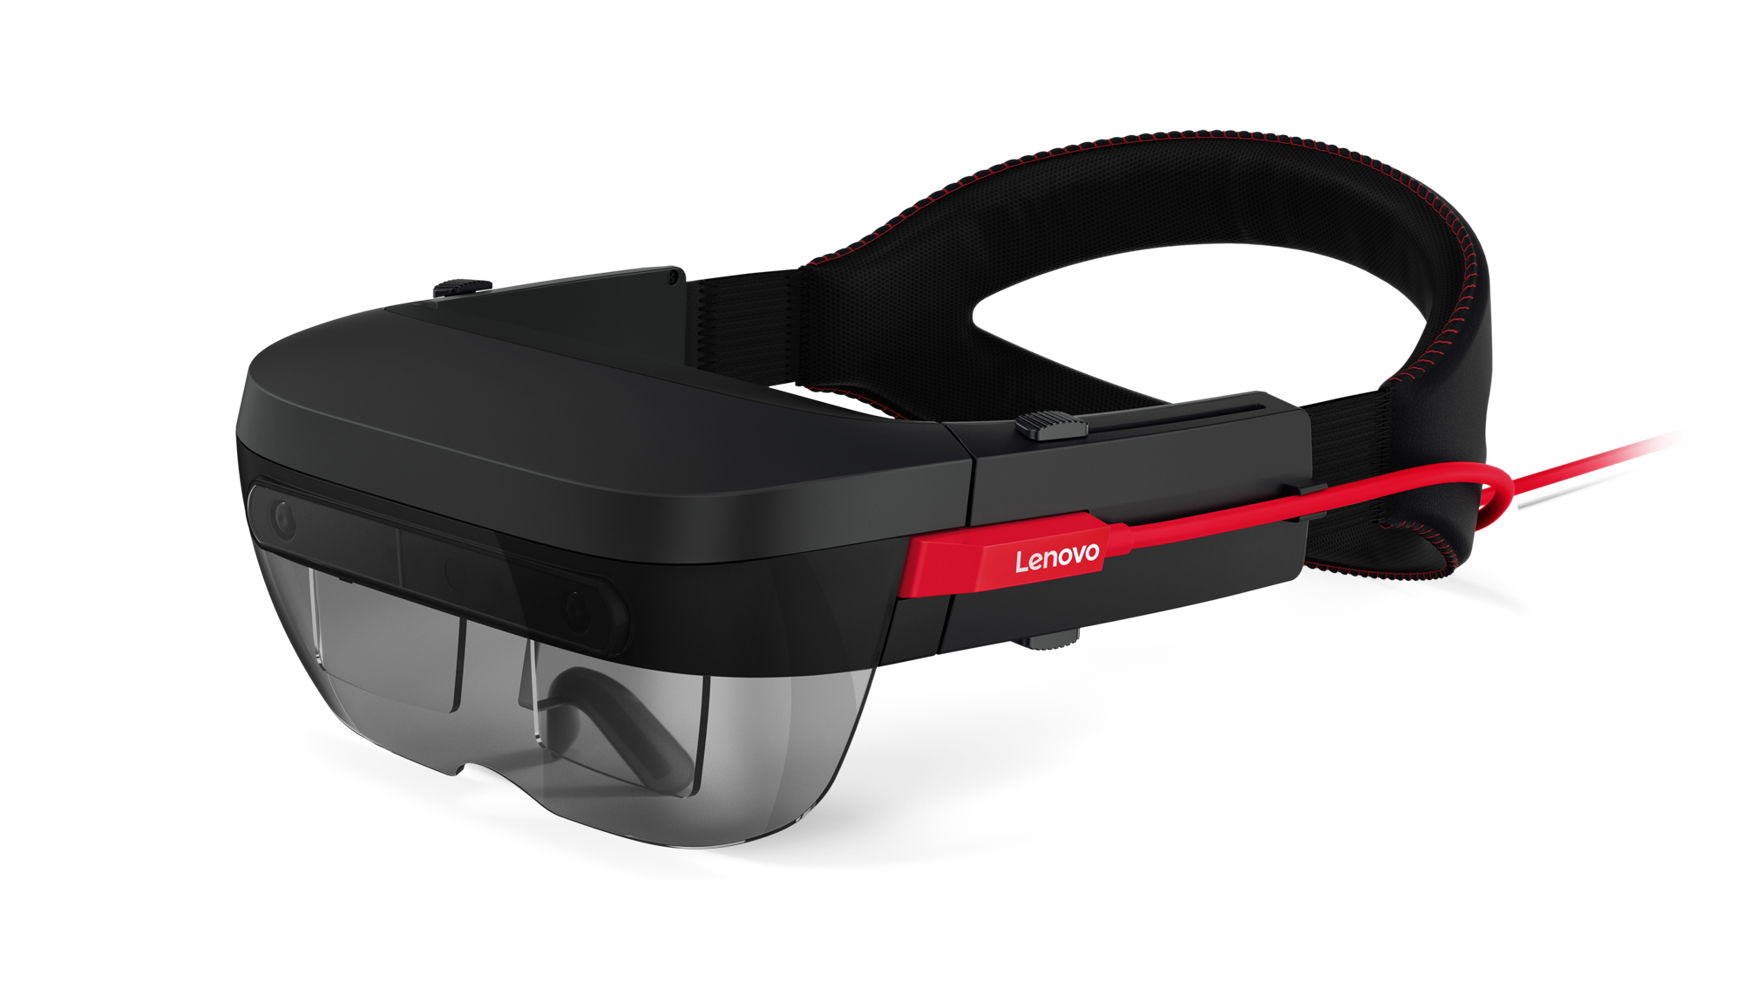 Lenovo Takes on HoloLens with New AR Headset, Platform